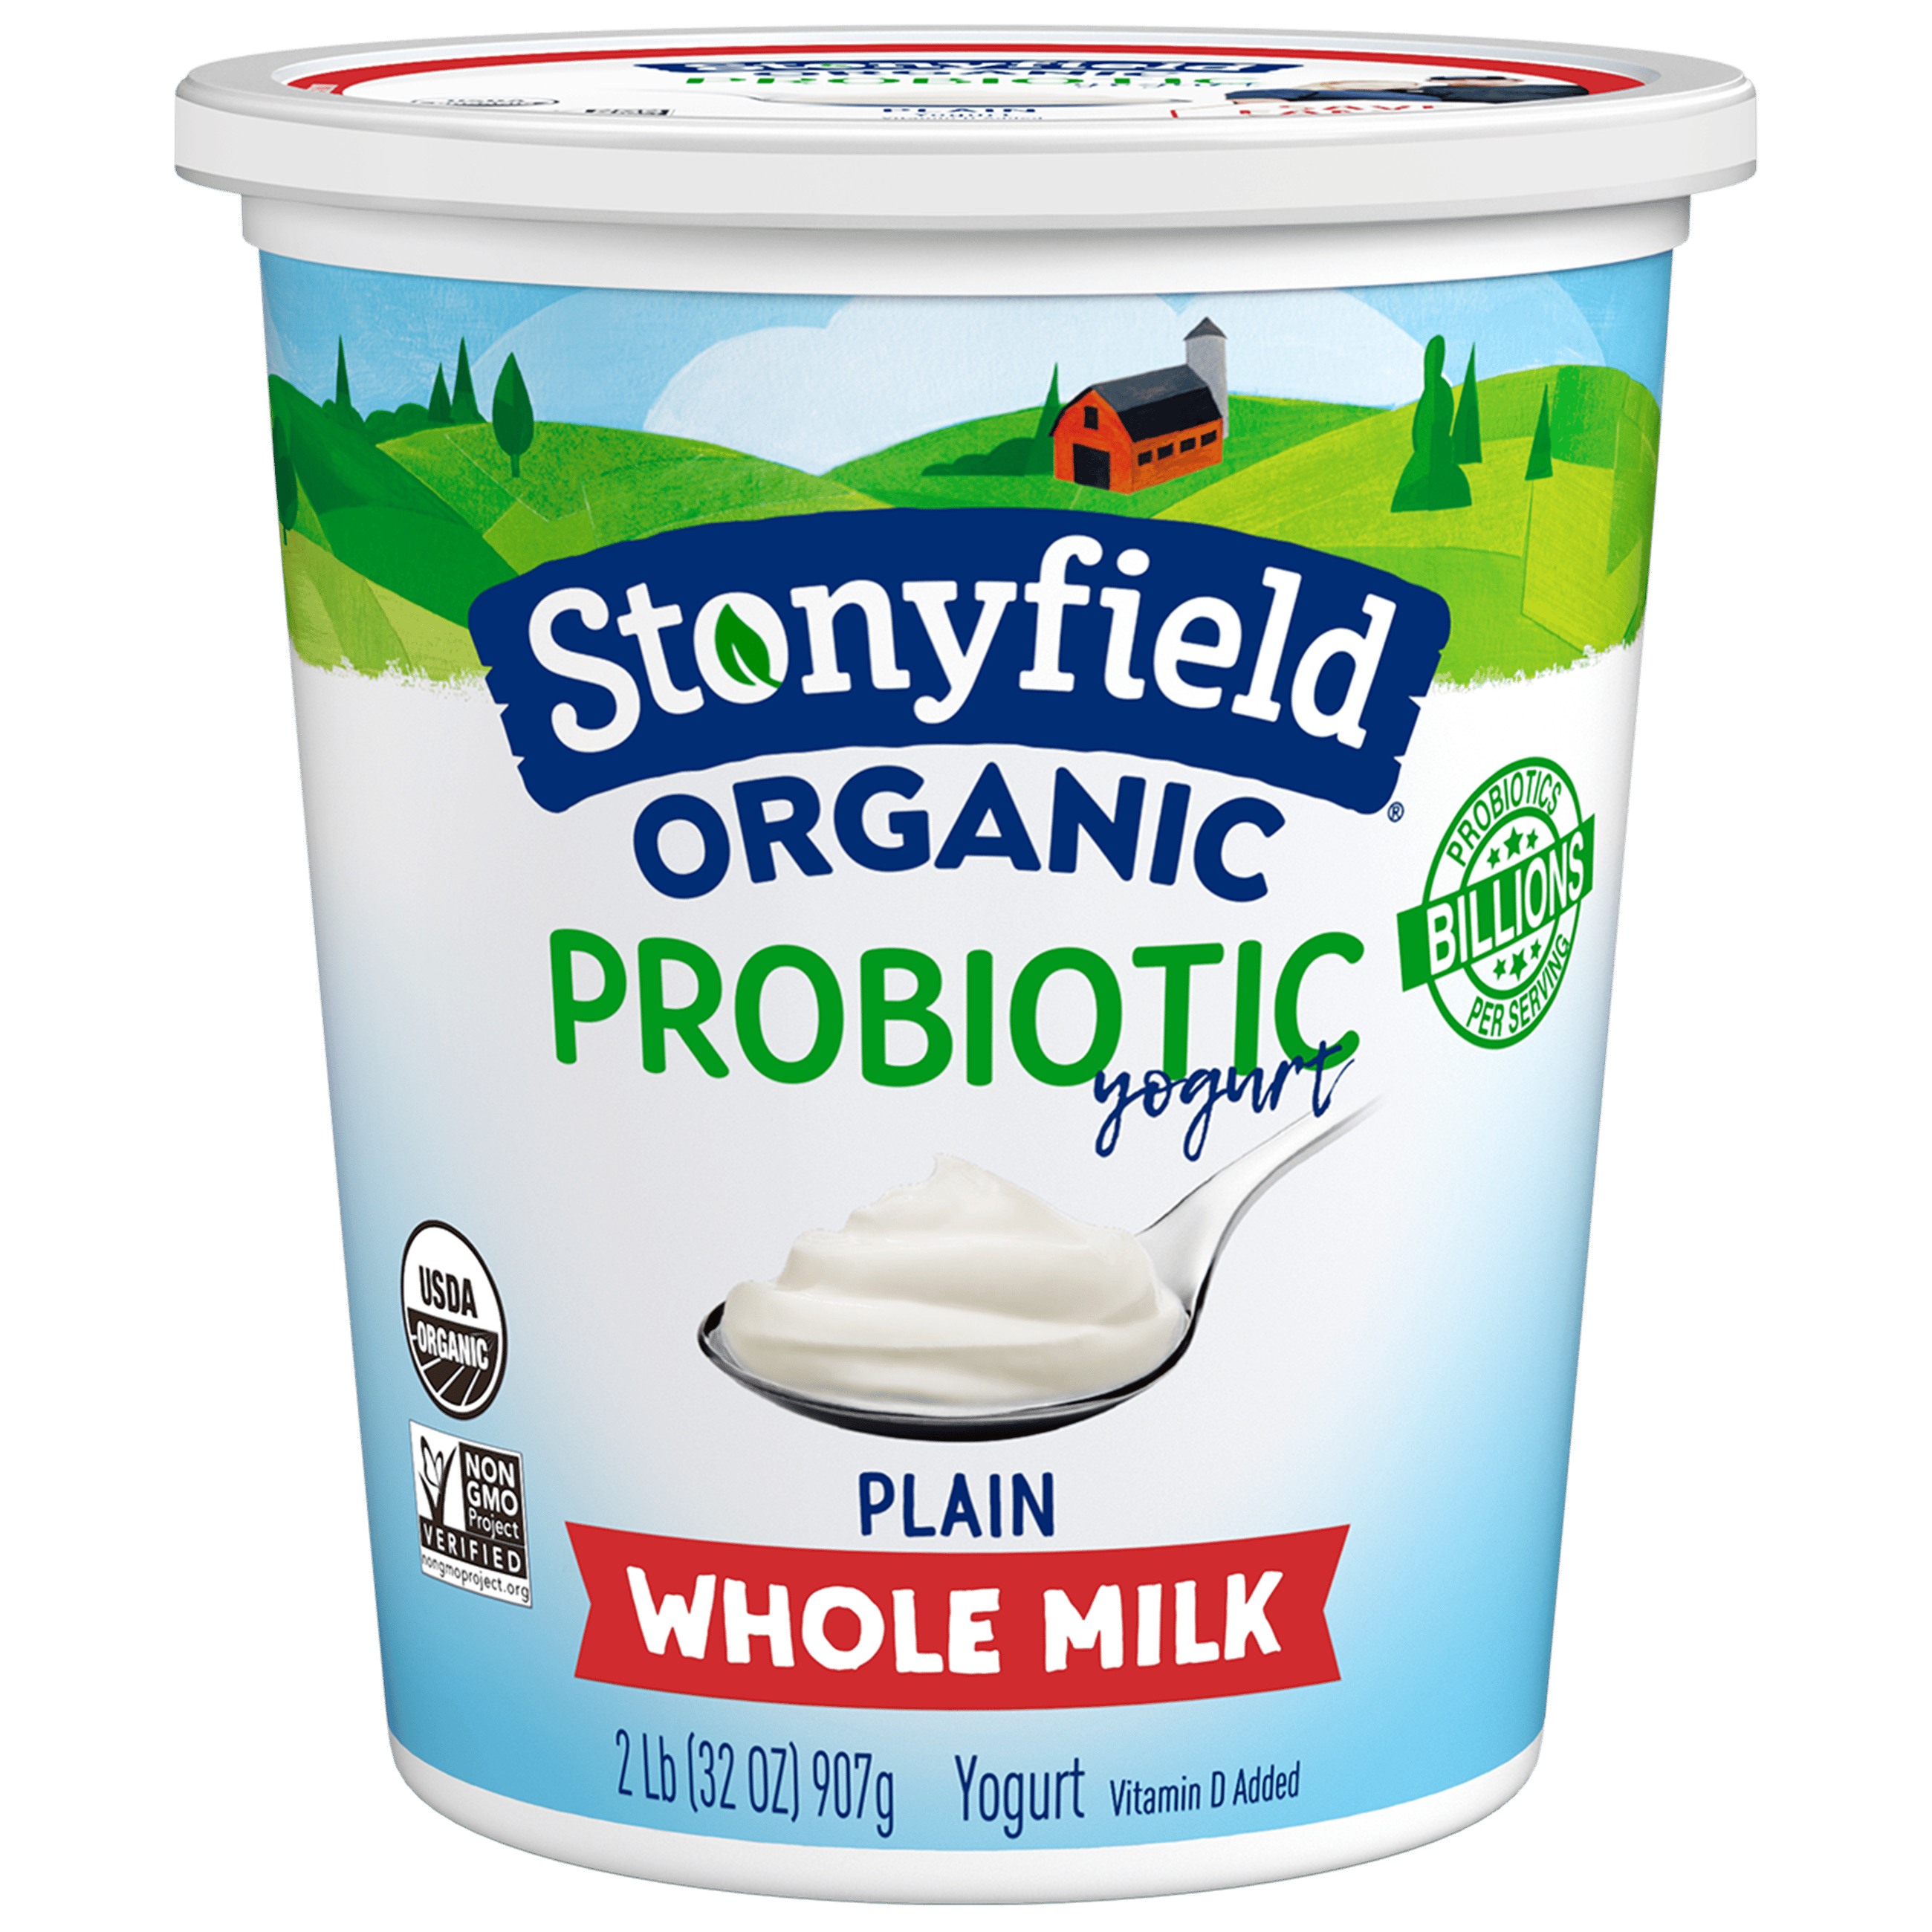 Stonyfield Organic Probiotic yogurt product